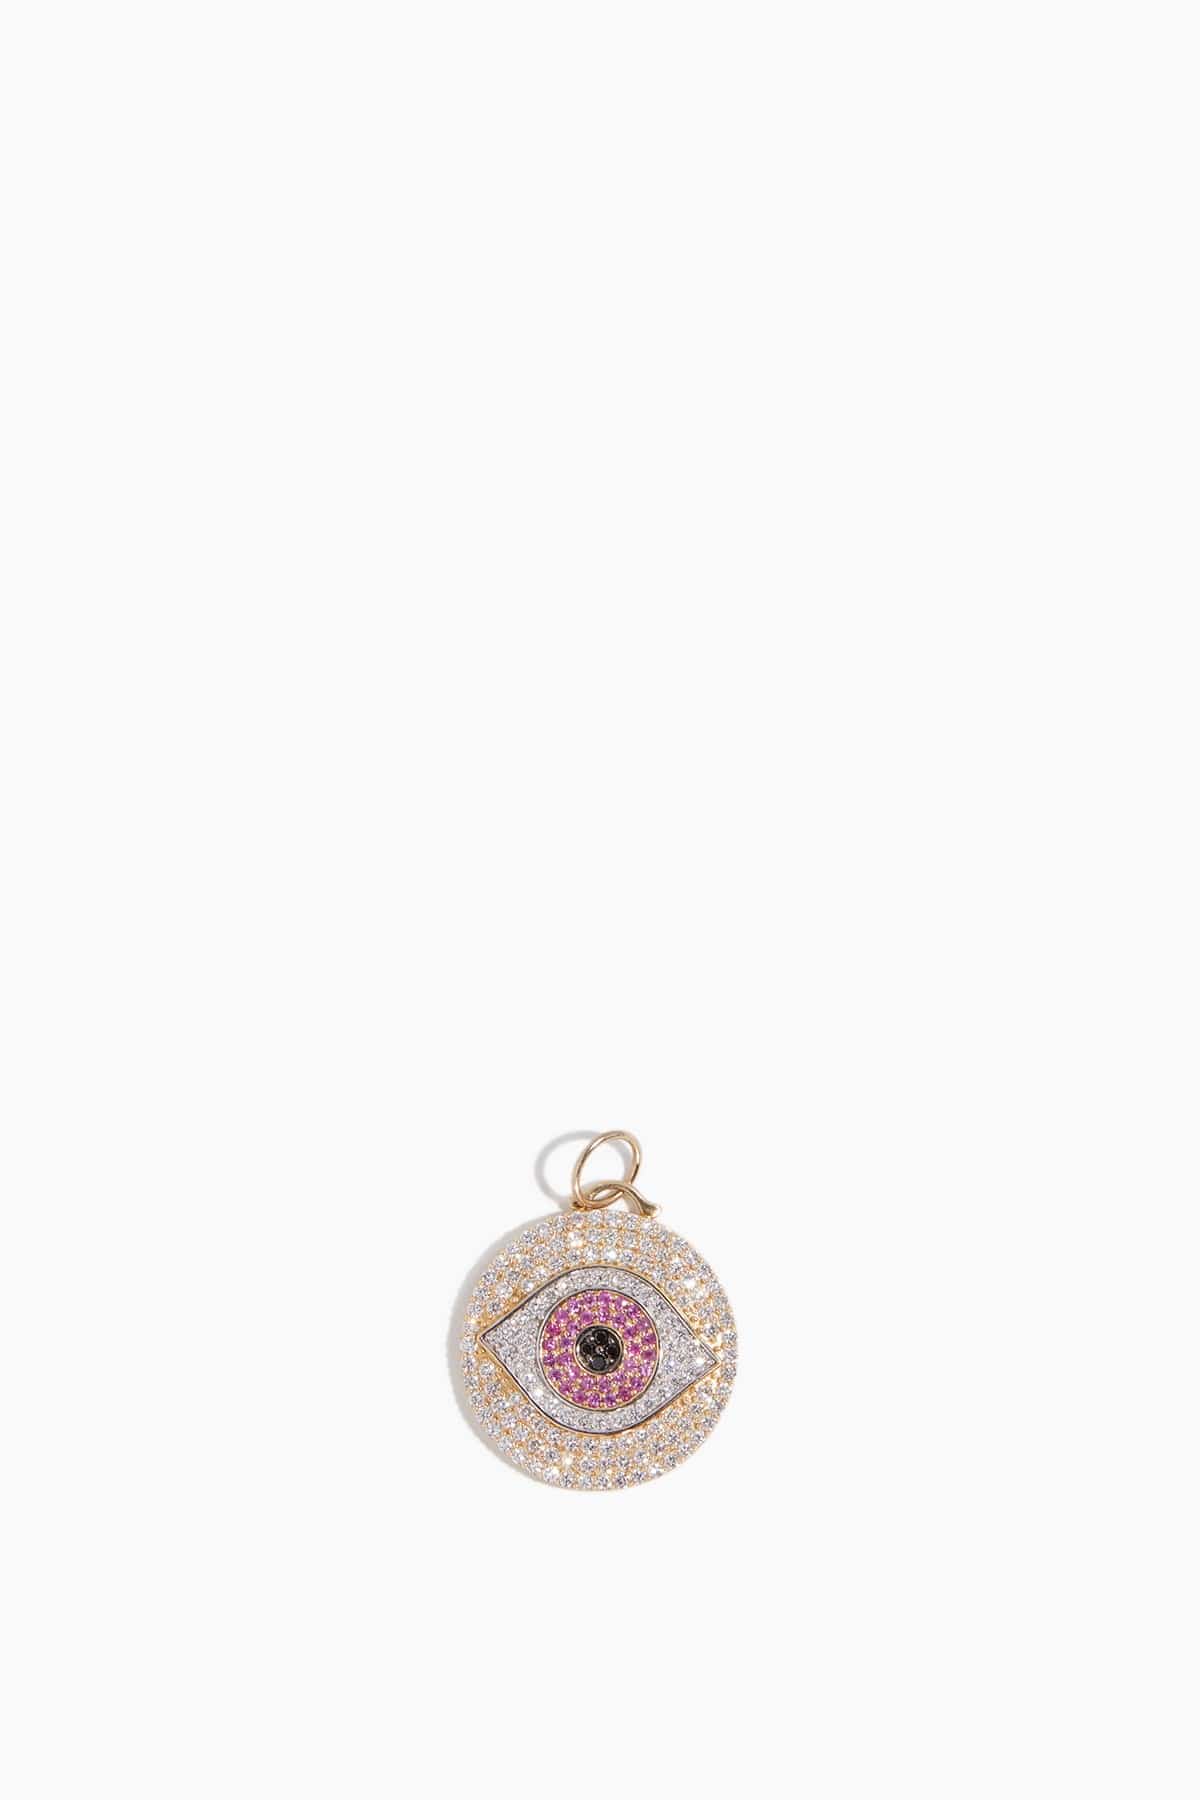 Vintage La Rose Unclassified Pink Sapphire Evil Eye Pendant in 14K Yellow Gold